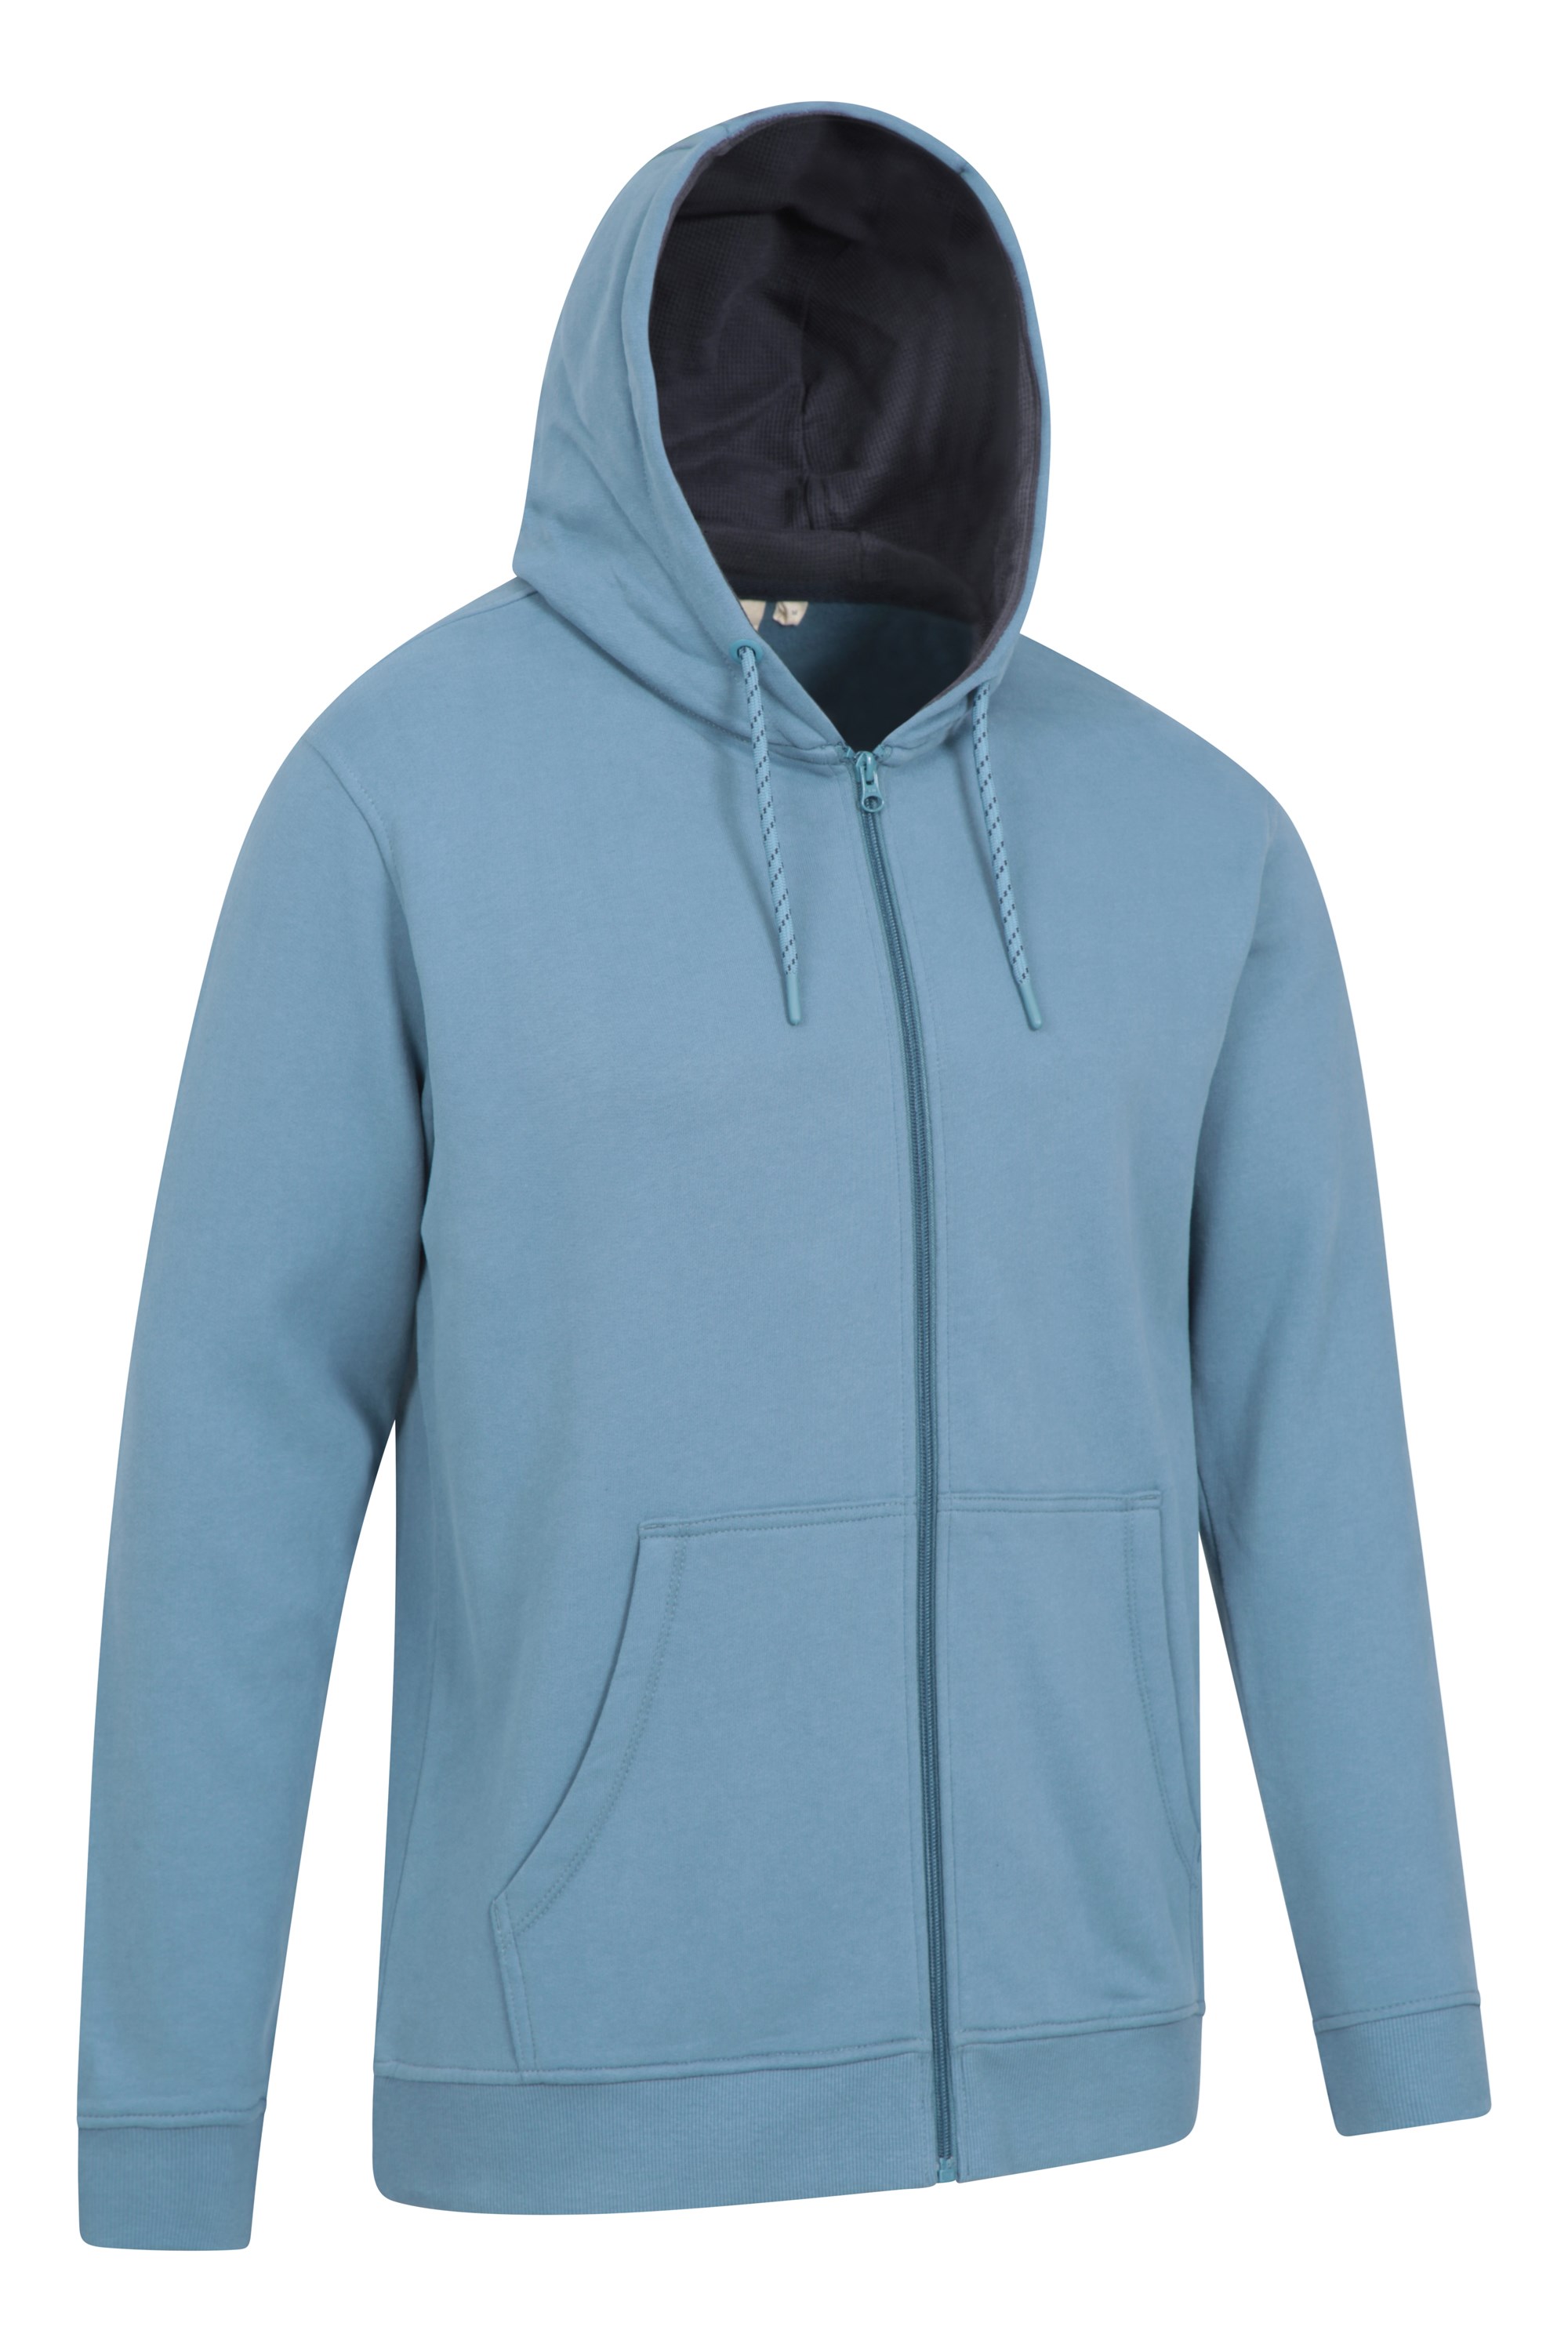 GRMO Men Outdoor Zip Up Long Sleeve Hooded Sweatshirt Jackets Caot 